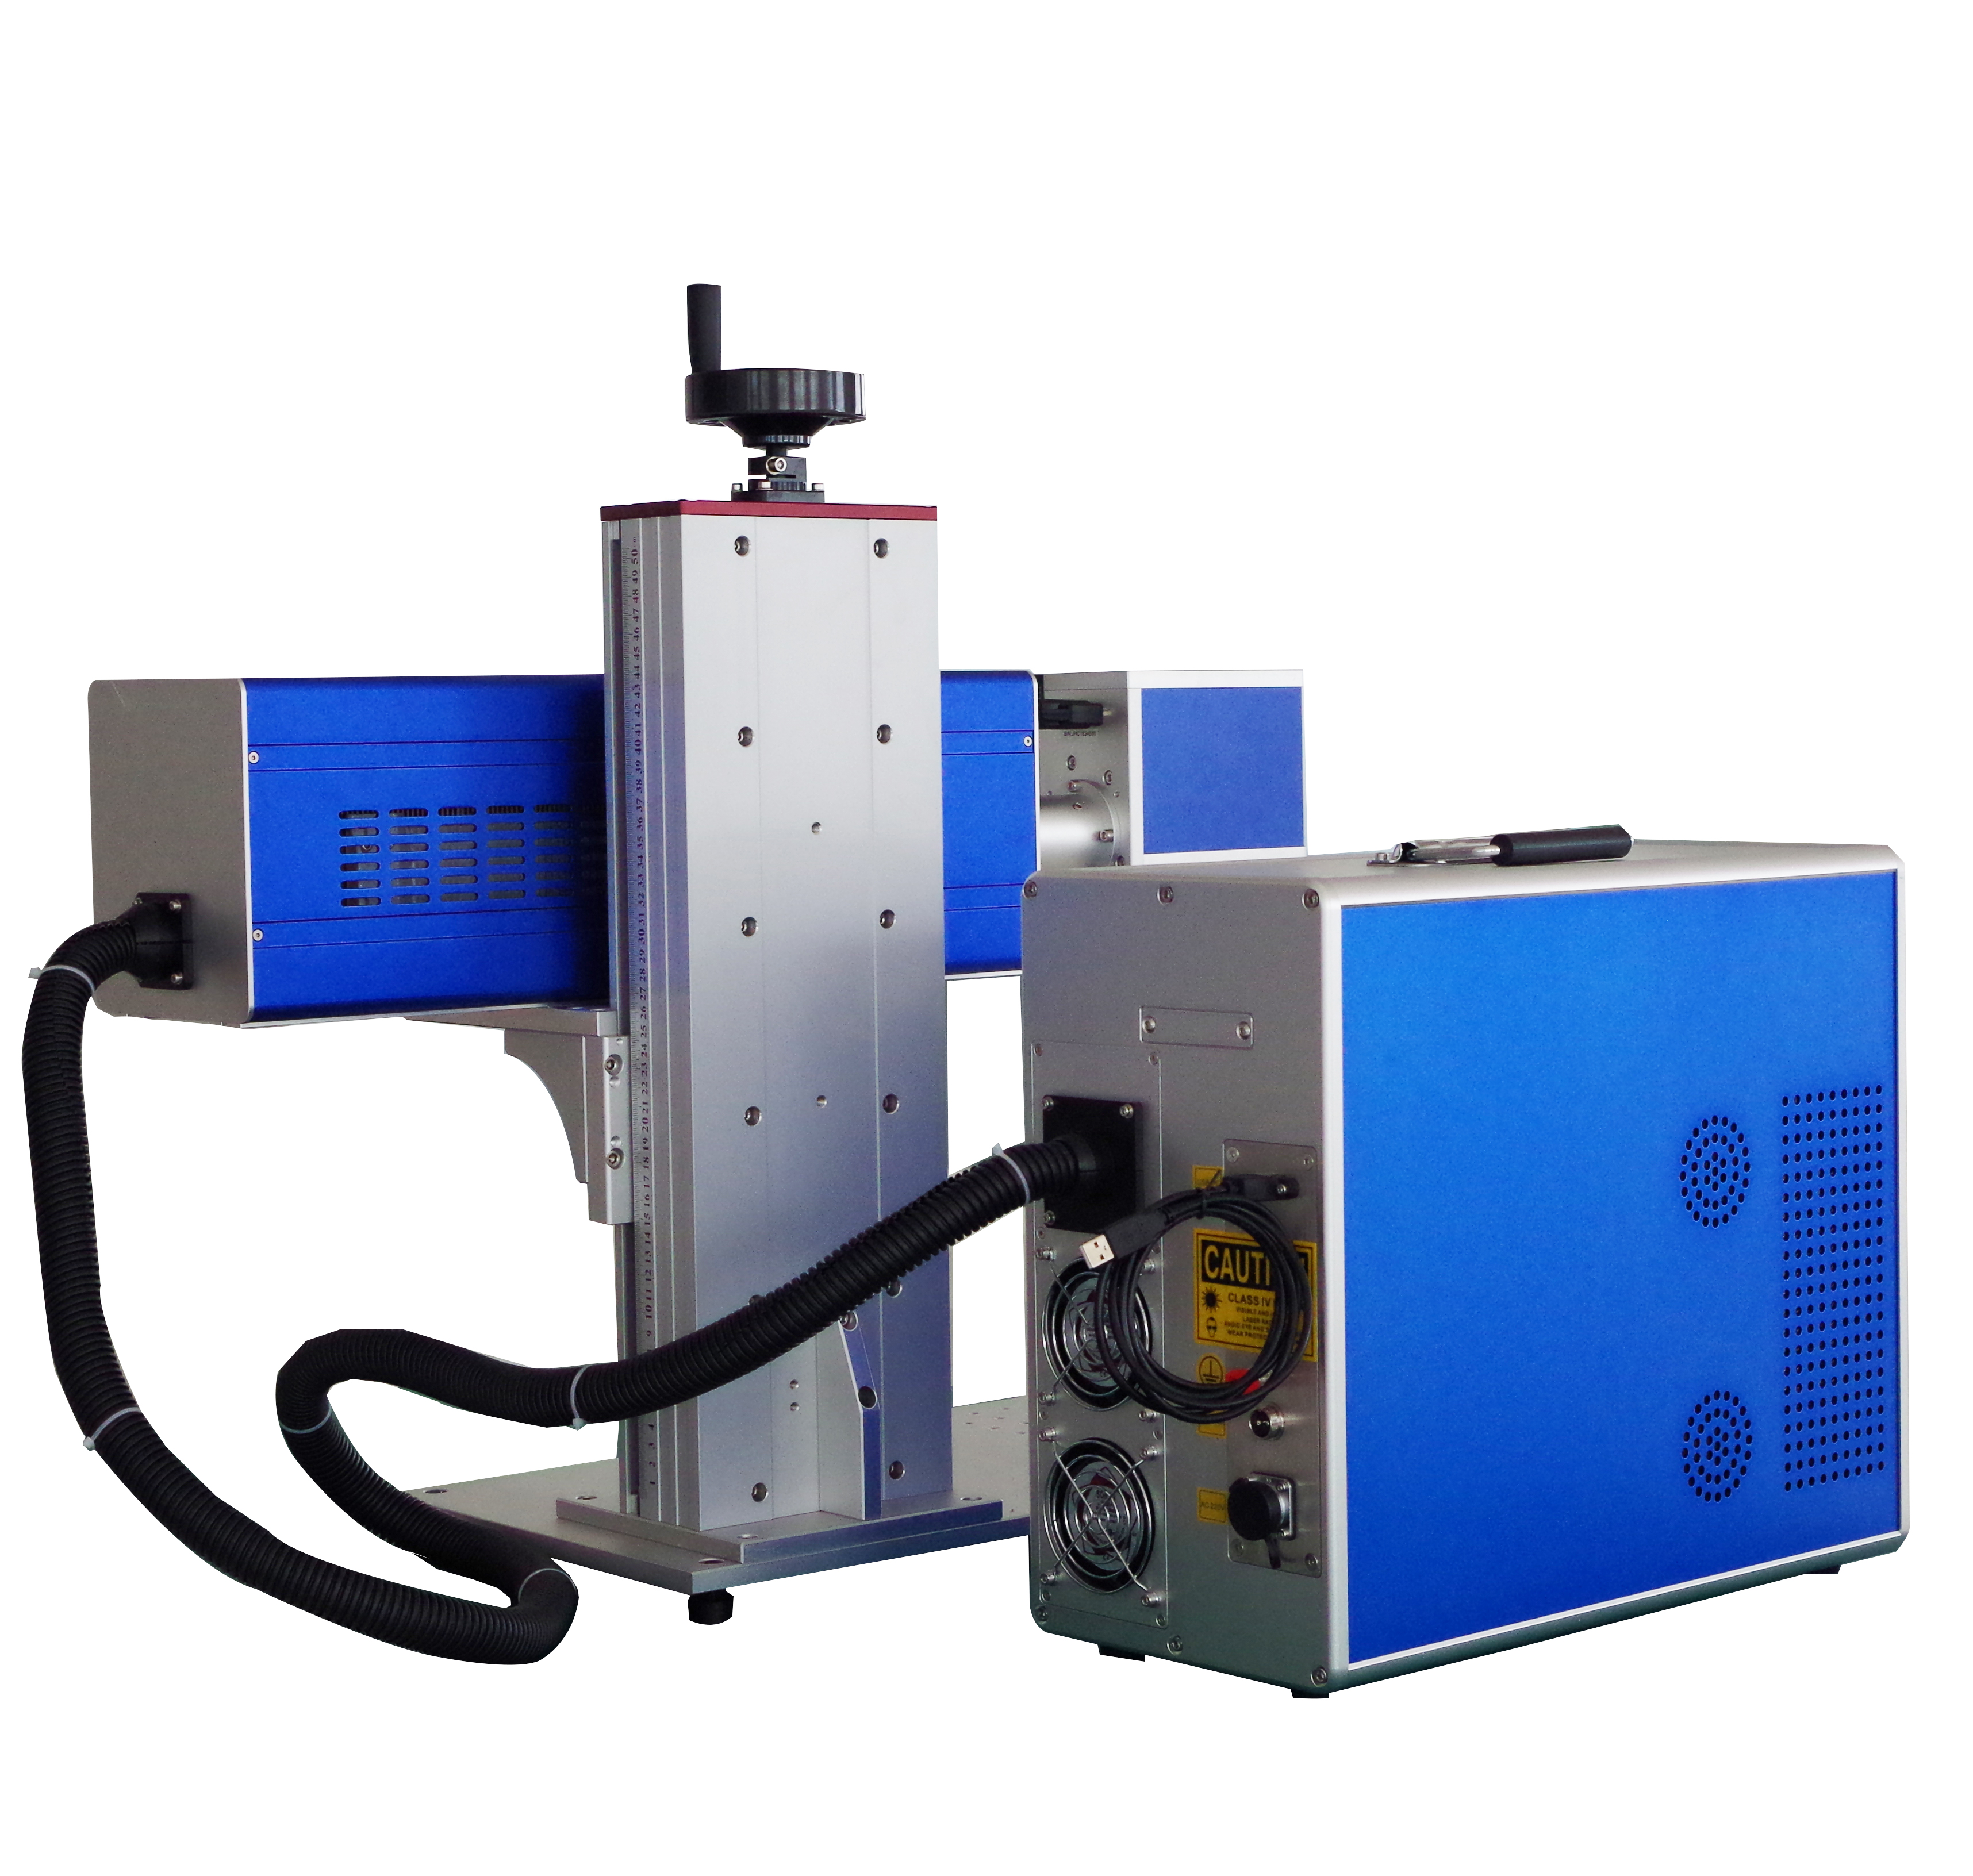 Coherente Synrad 30W CO2 Galvo-lasermarkeermachine Niet-metalen lasergraveermachine